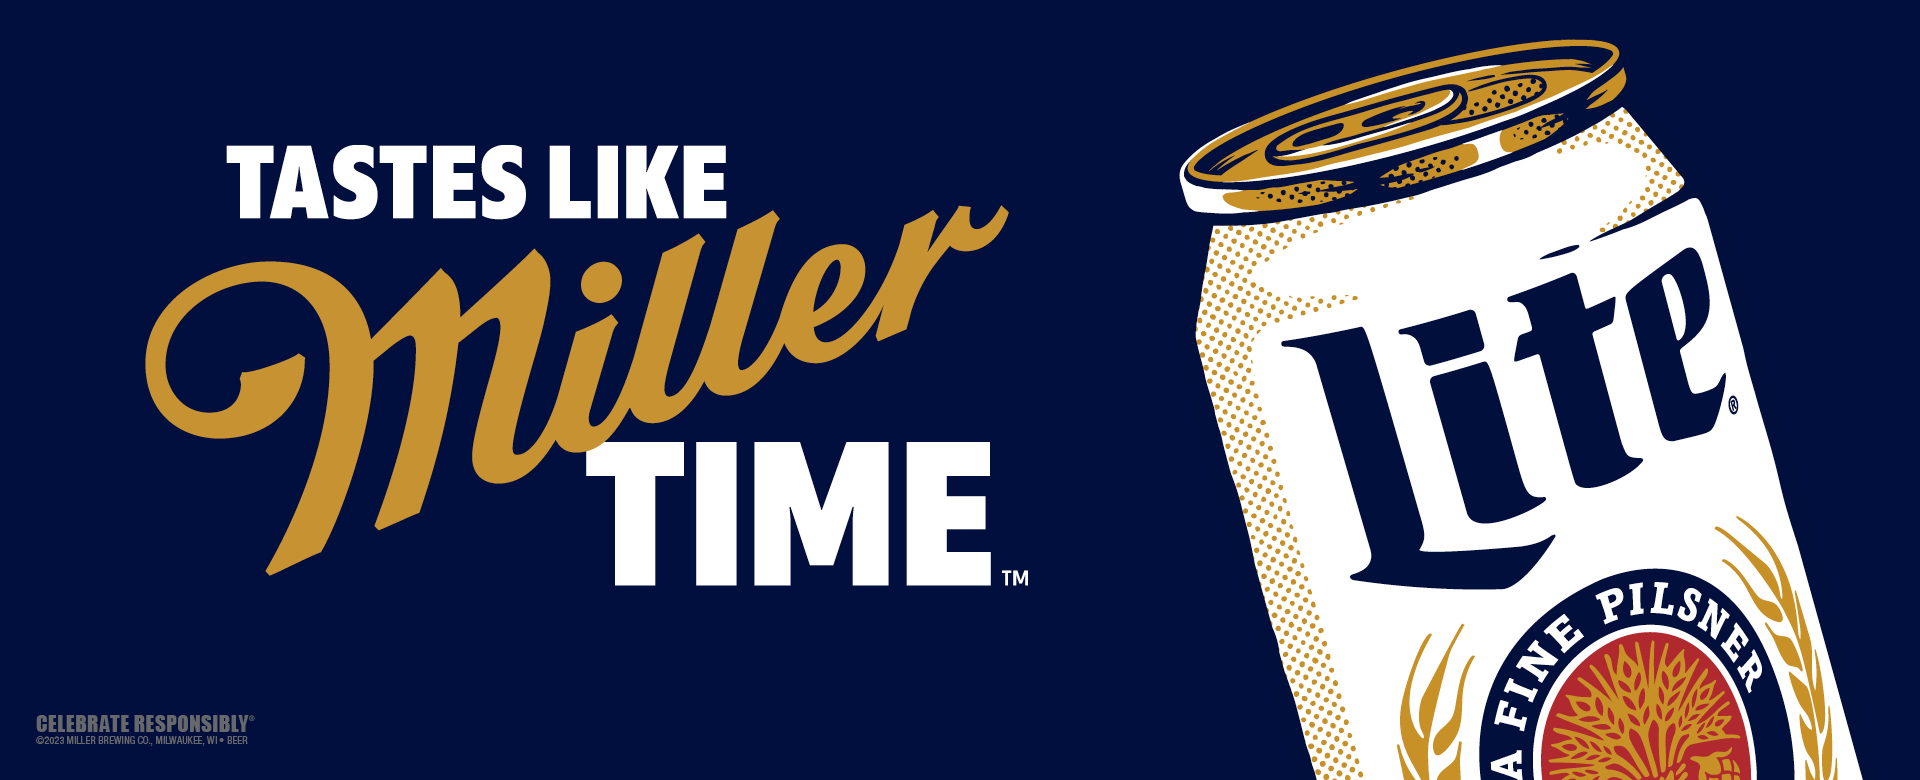 Tastes like Miller Time